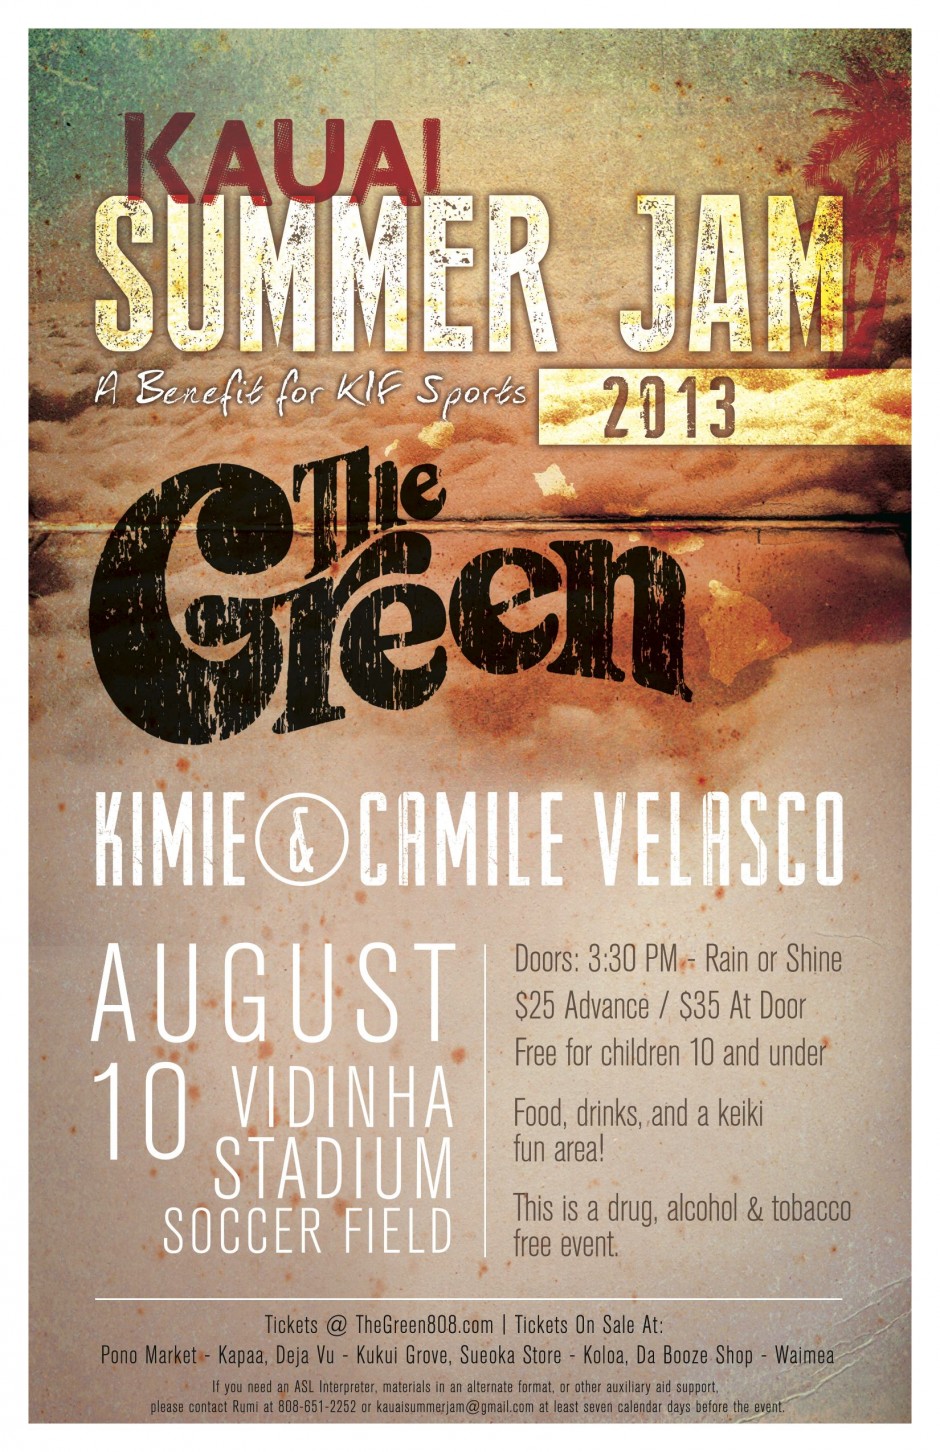 Kauai Summer Jam 2013 Saturday August 10 2013 3:30pm to 10:00pm at